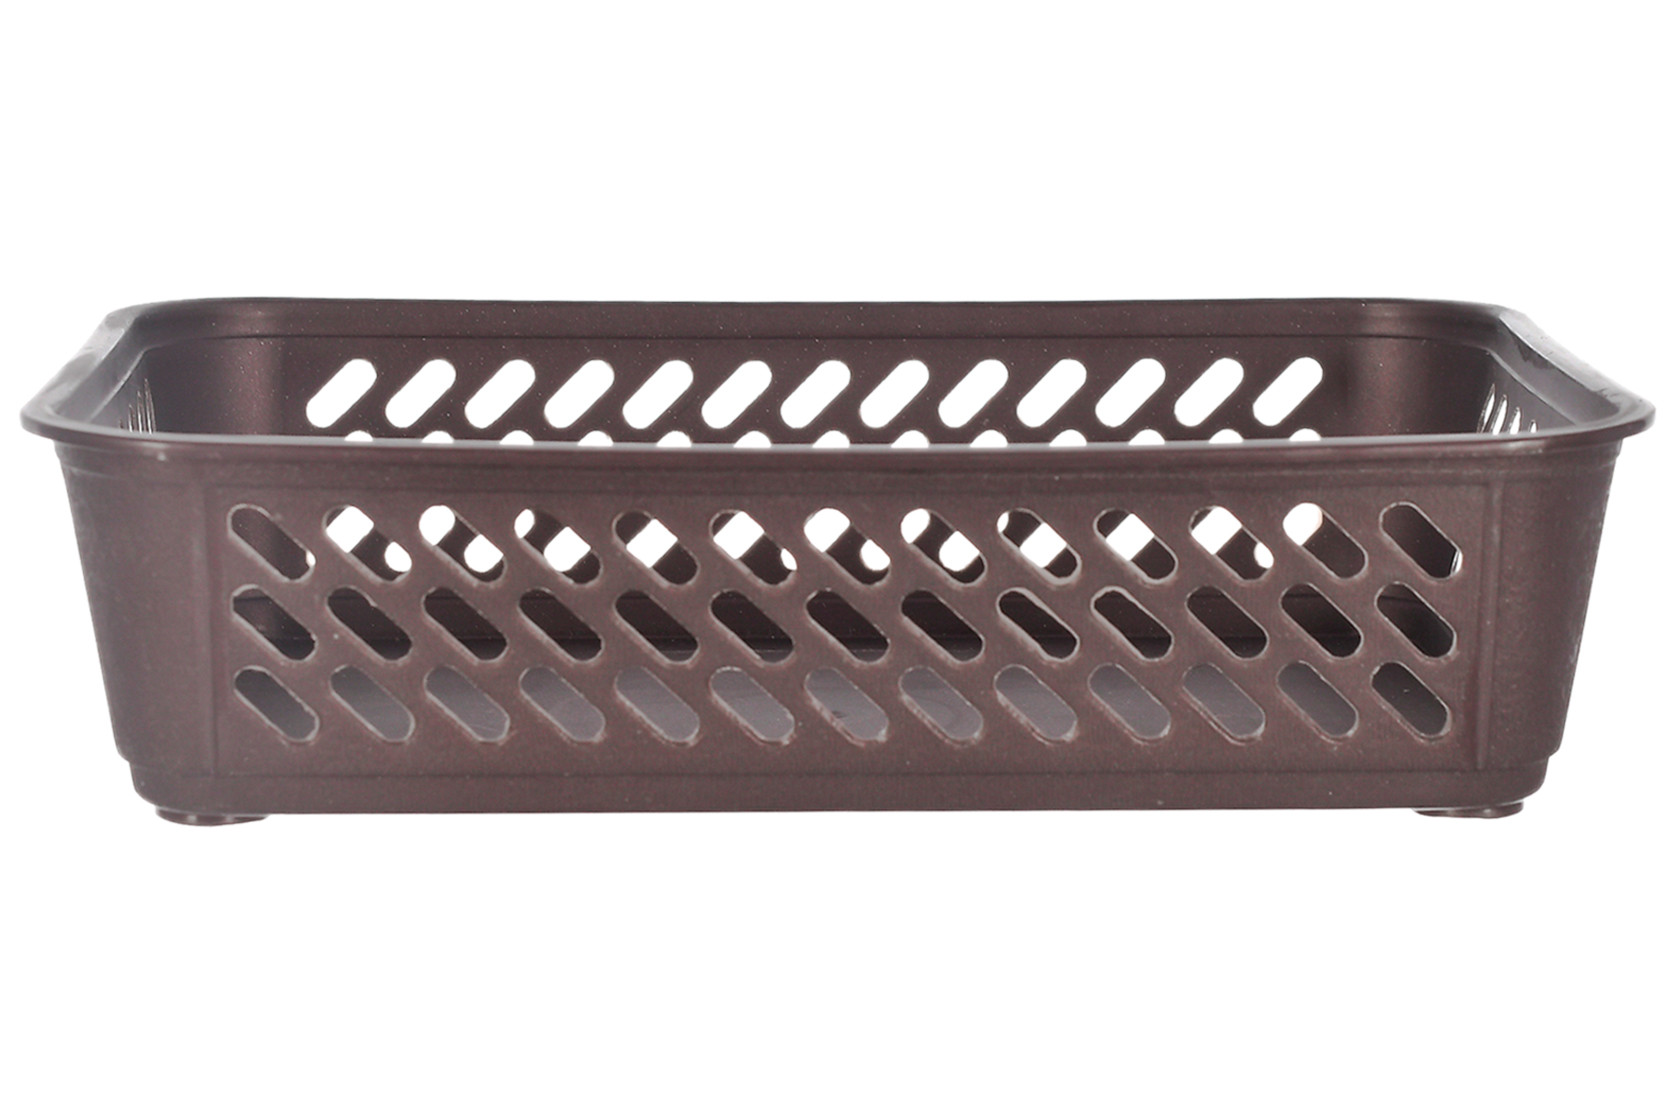 Kuber Industries Multiuses Super Tidy Plastic Tray/Basket/Organizer-(Brown) -46KM0565